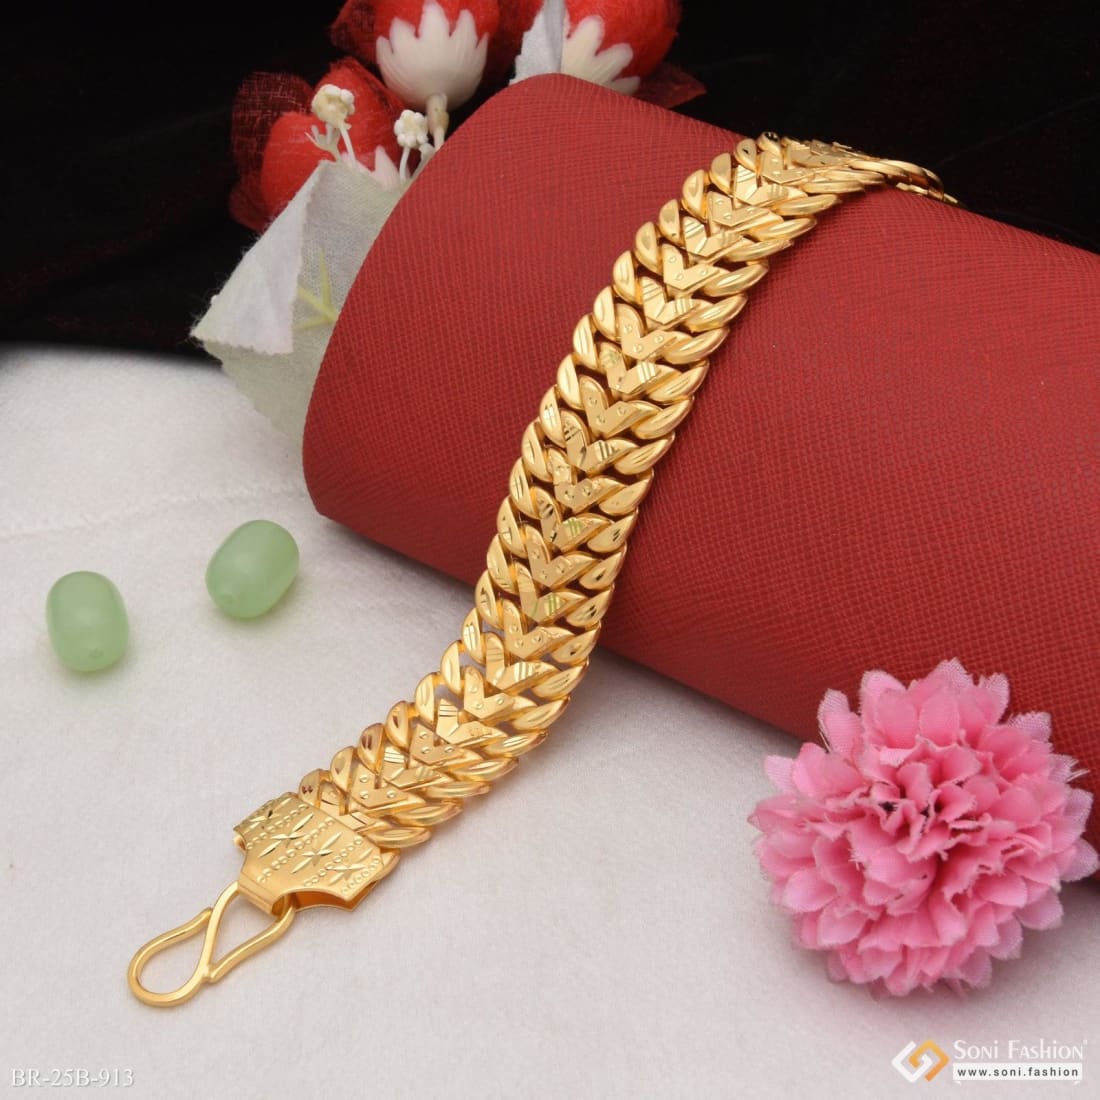 Praying Boy Round Eye Hook Bangle Bracelet - Gold-Filled Charm - 6.25 Inch  (4263GF)